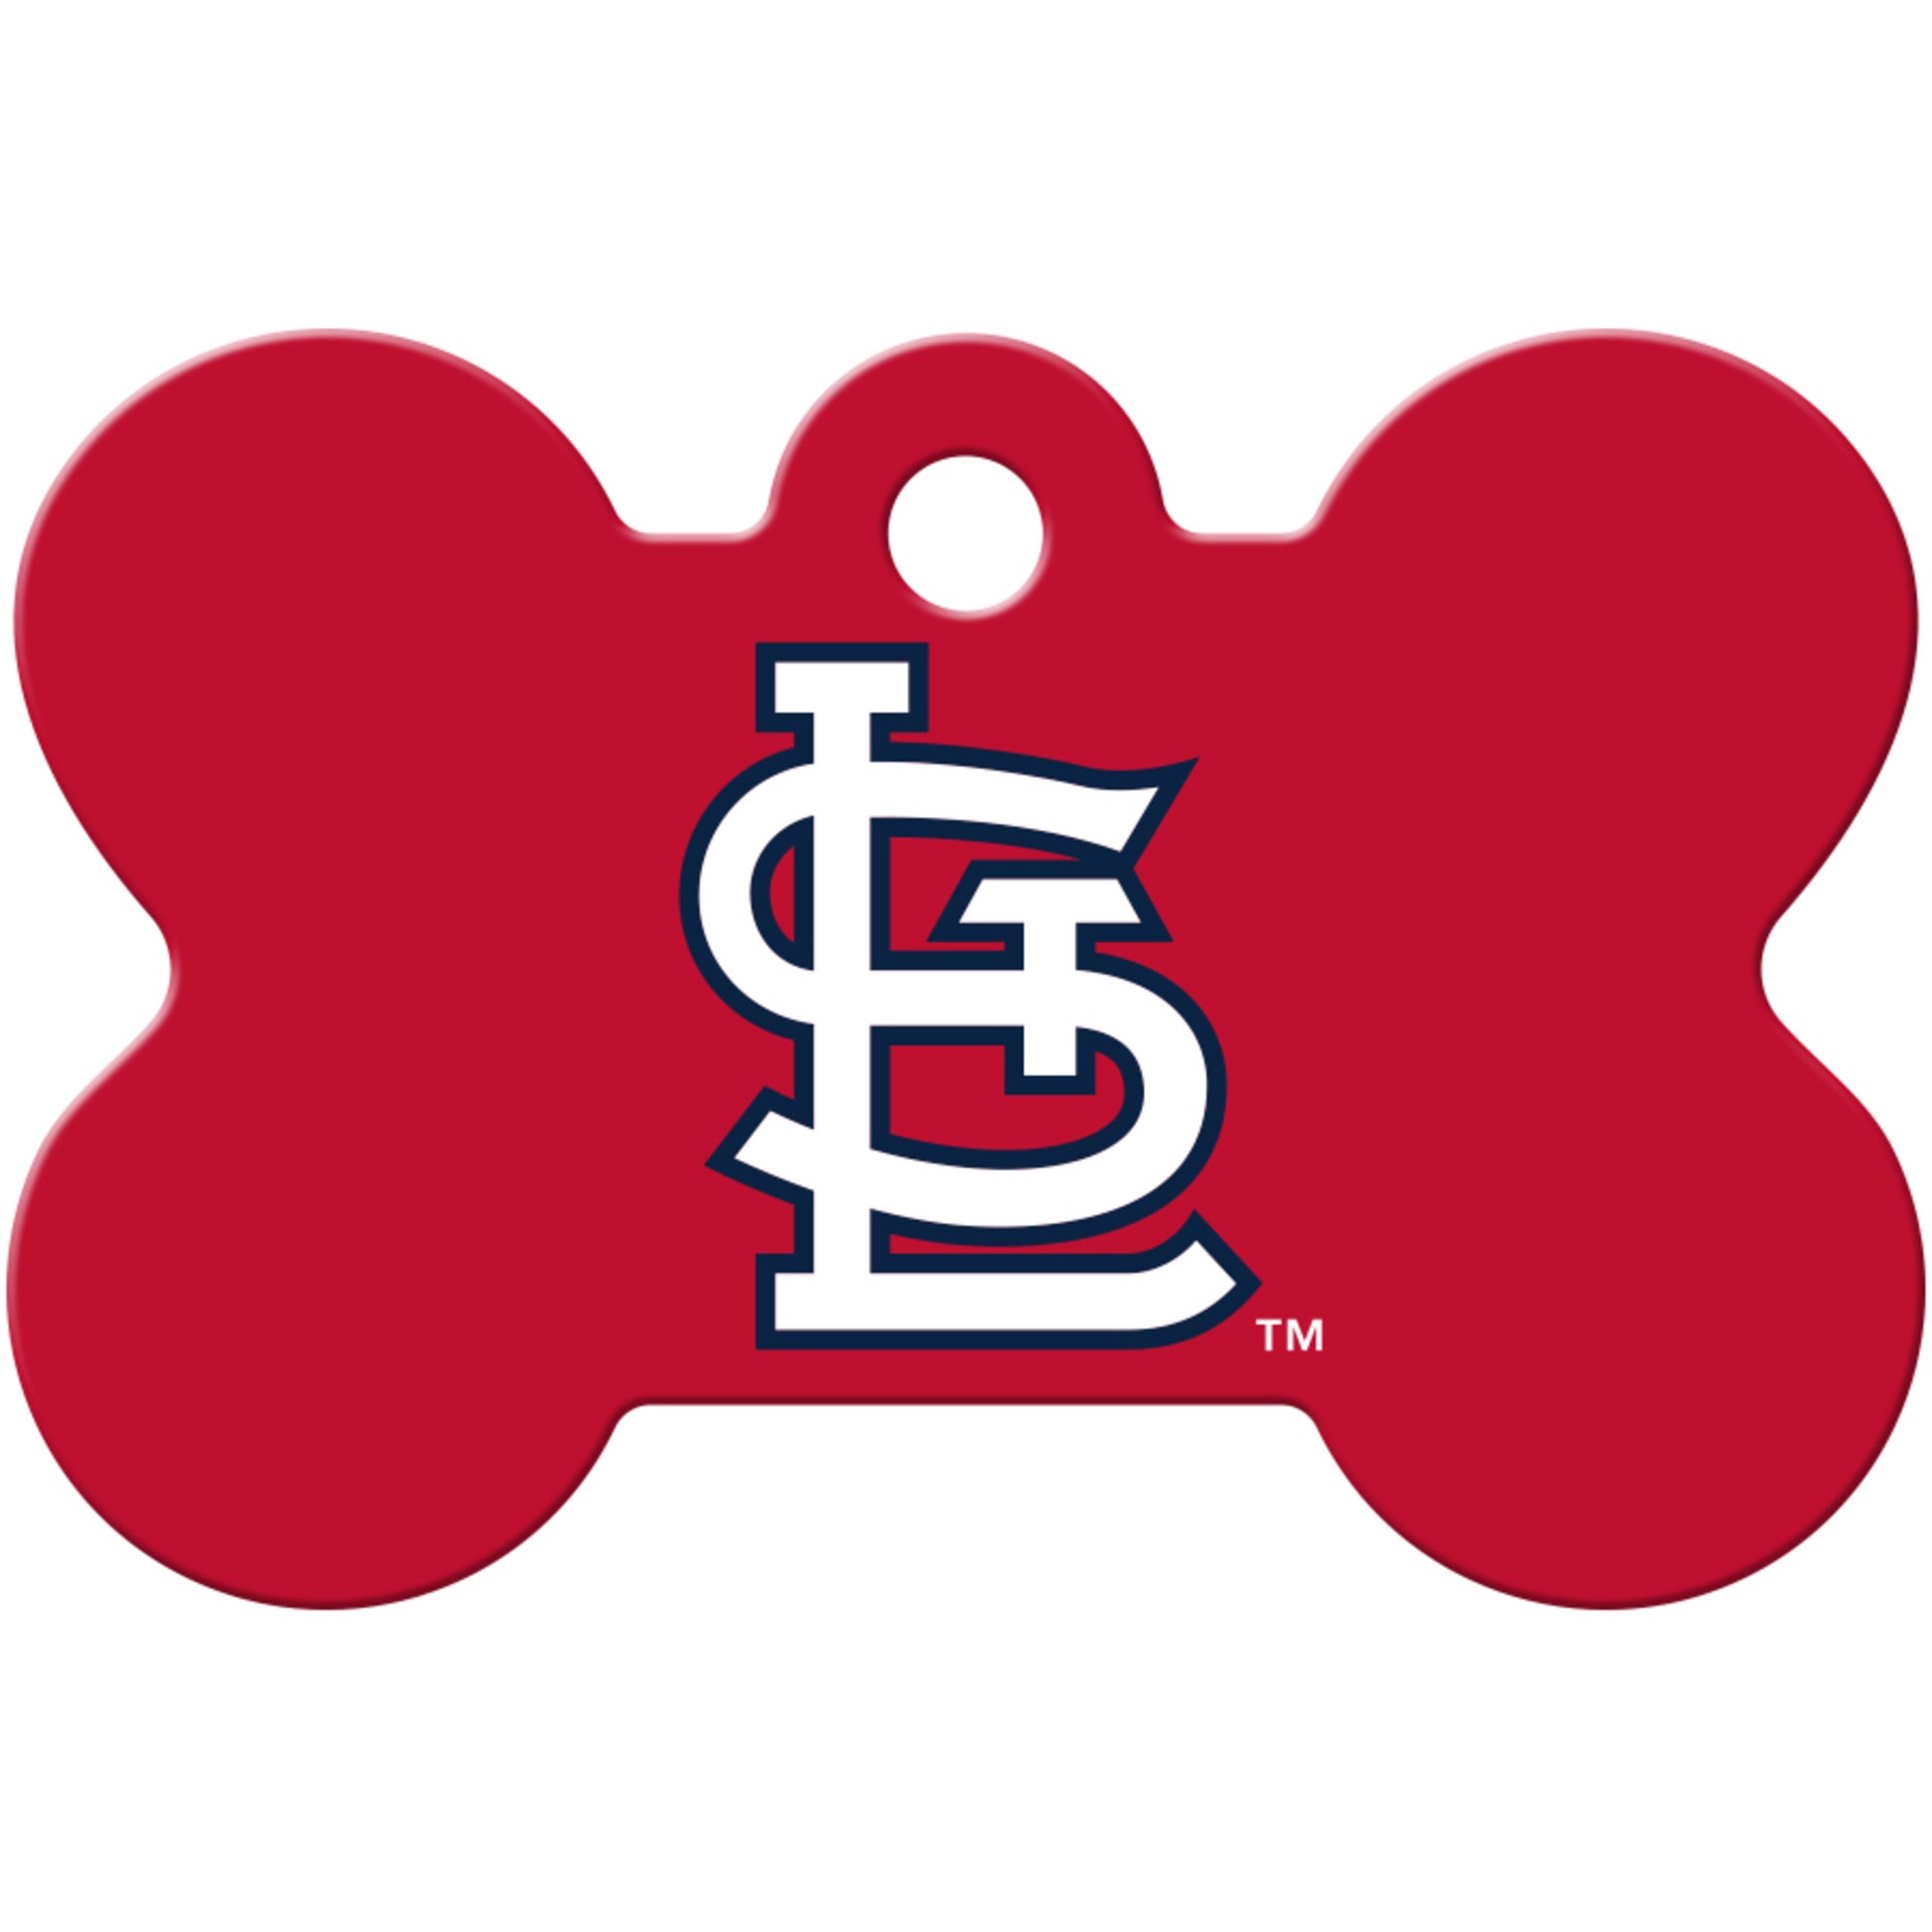 St. Louis Cardinals Dog Jerseys, Cardinals Pet Carriers, Harness